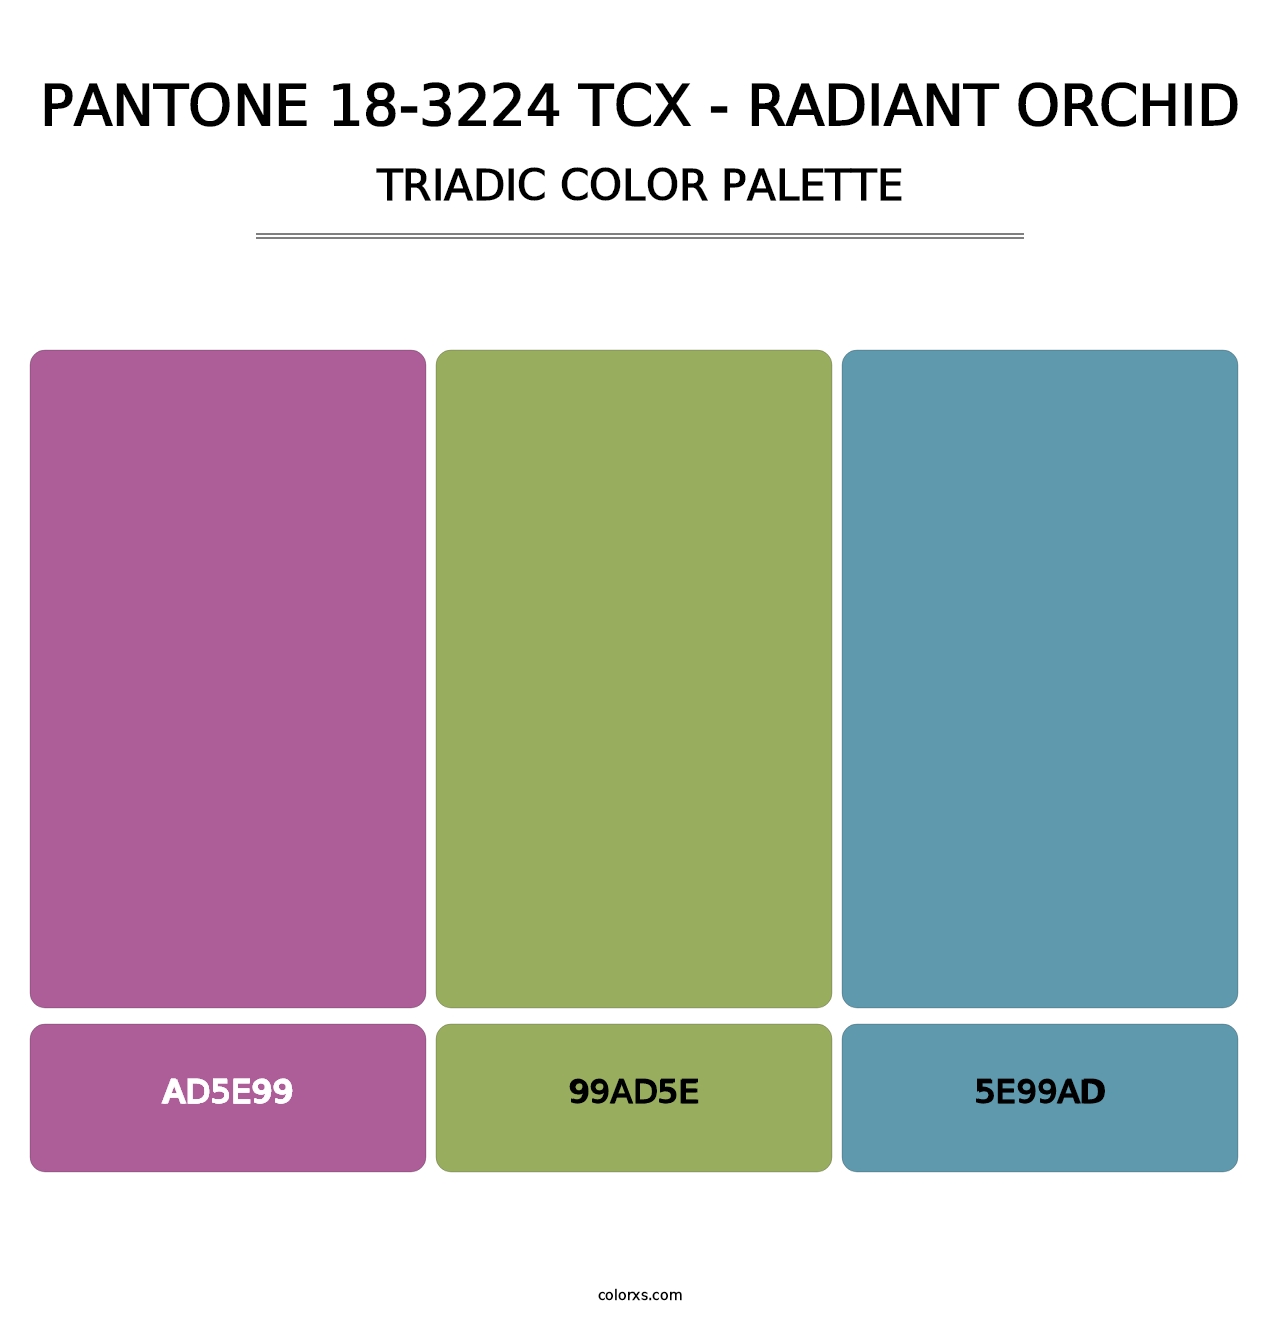 PANTONE 18-3224 TCX - Radiant Orchid - Triadic Color Palette